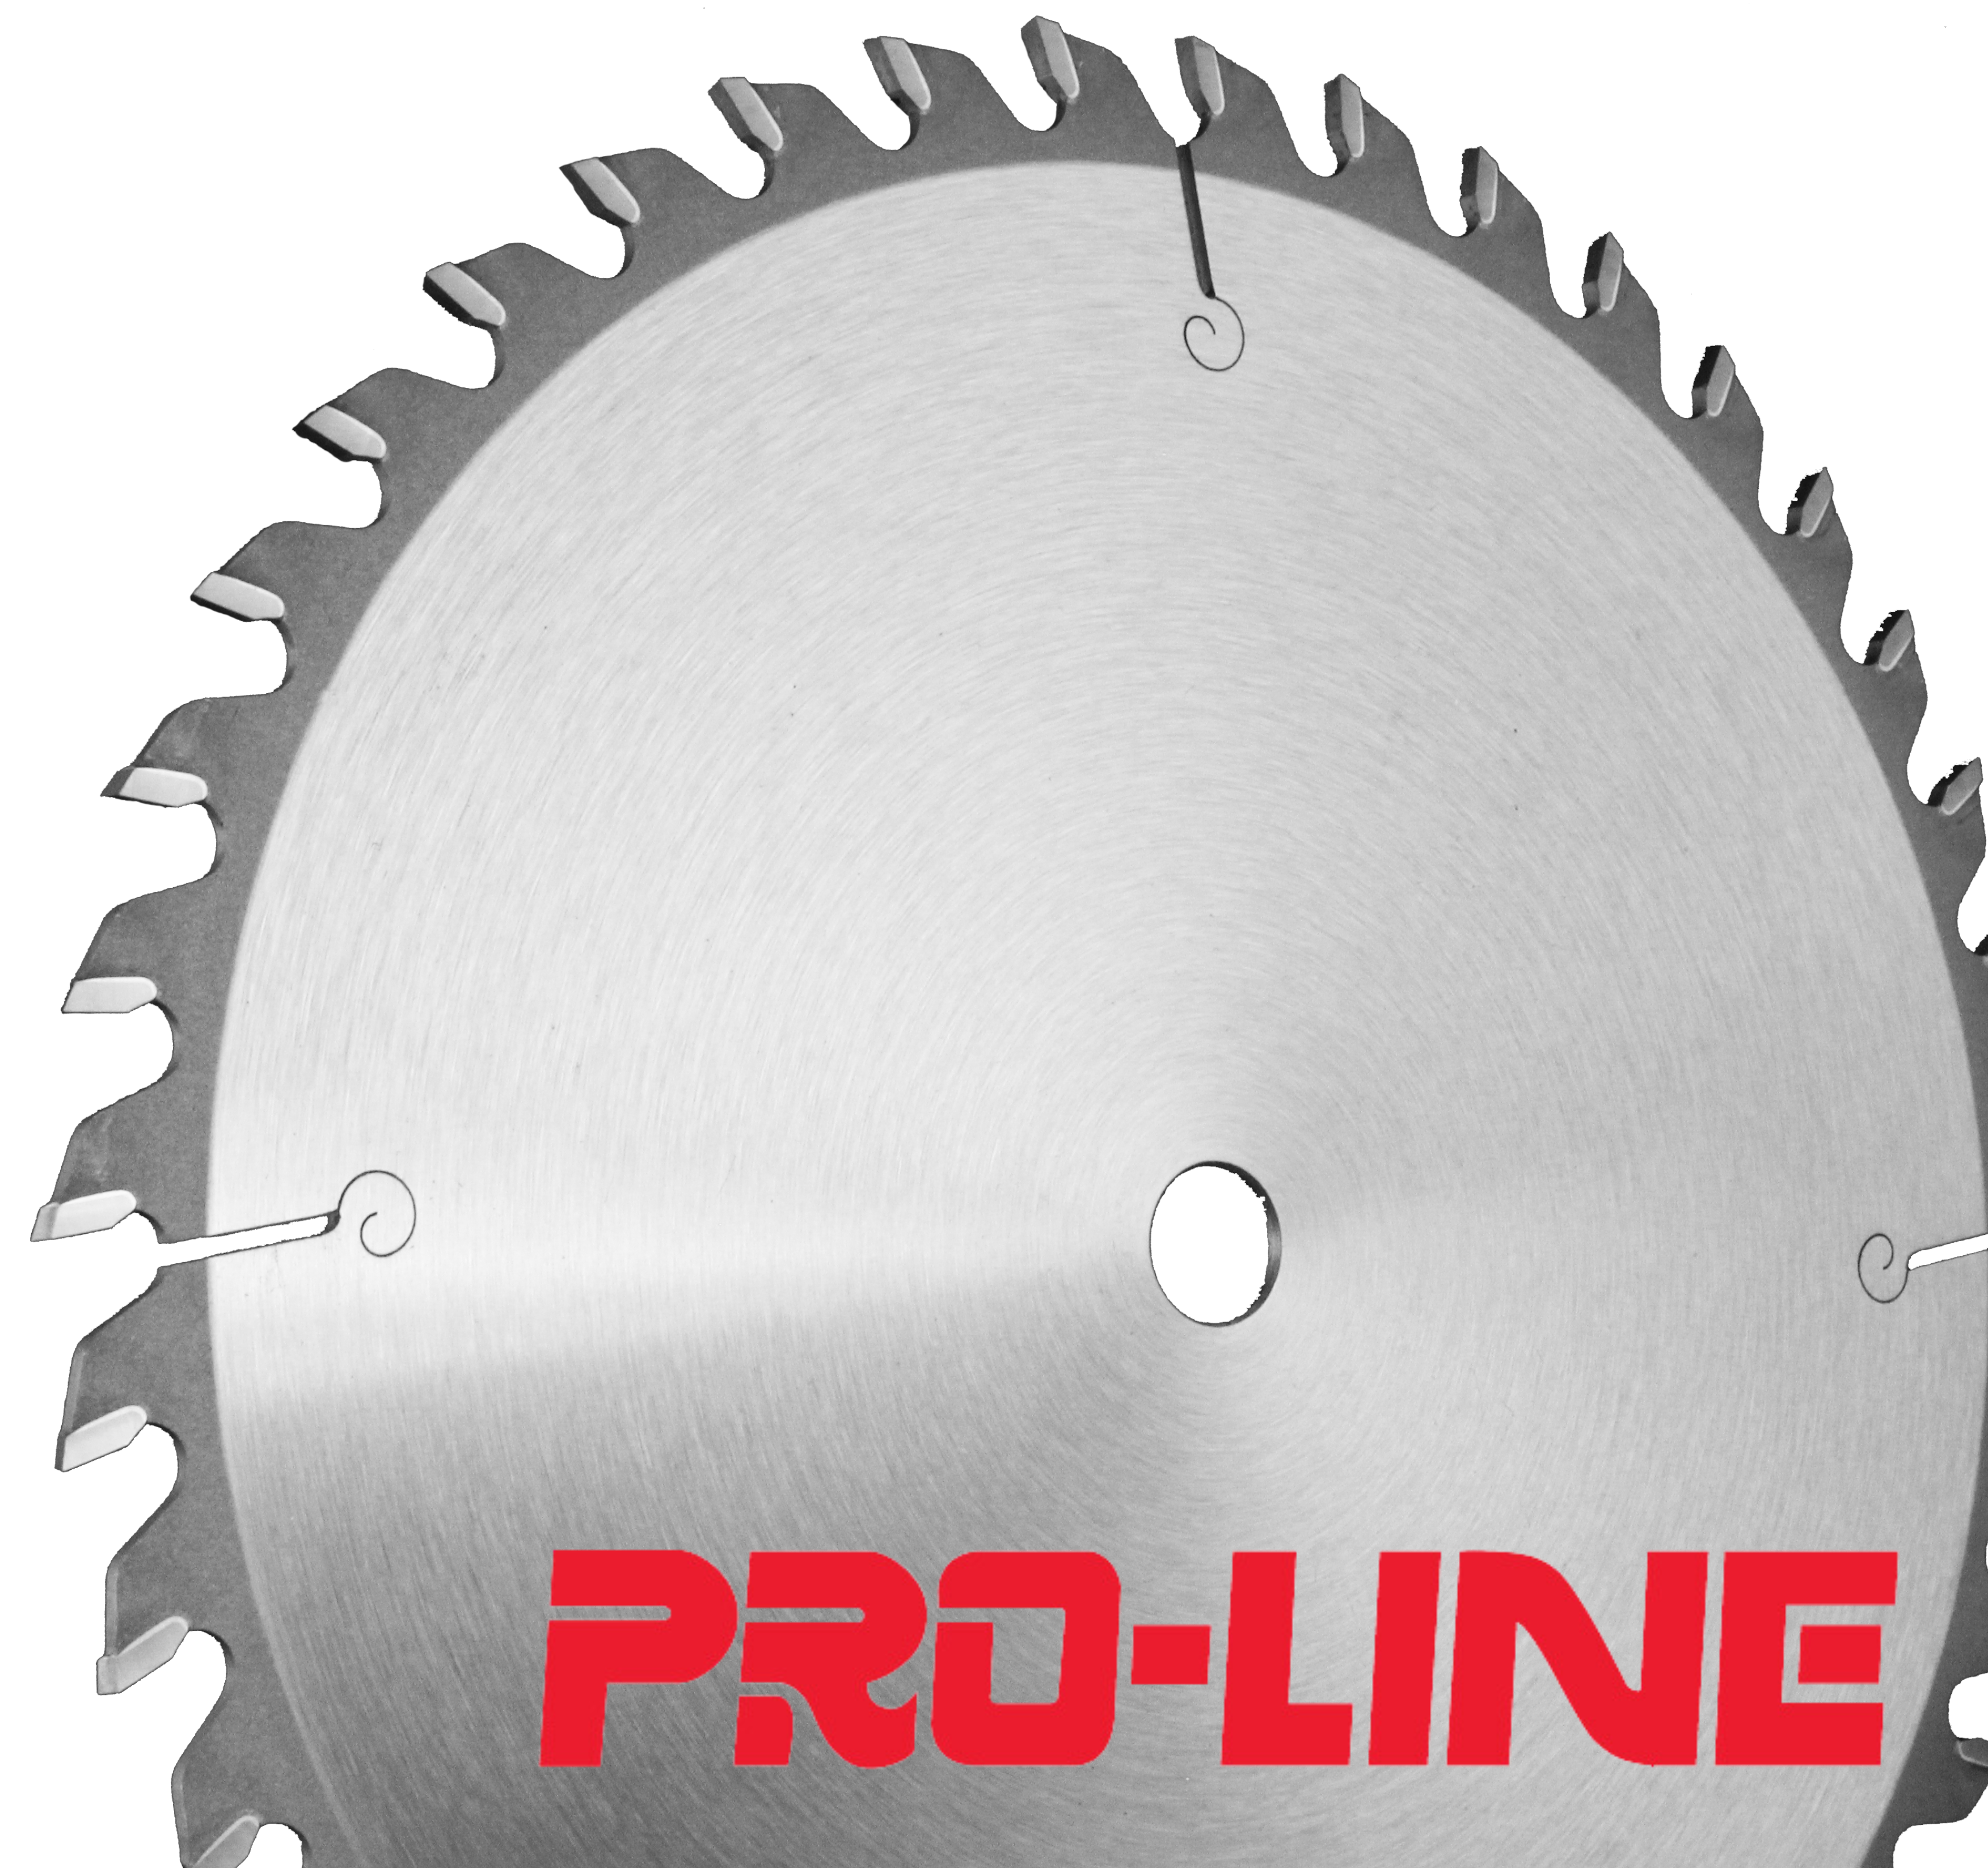 Proline - ATB Cut Off | Product